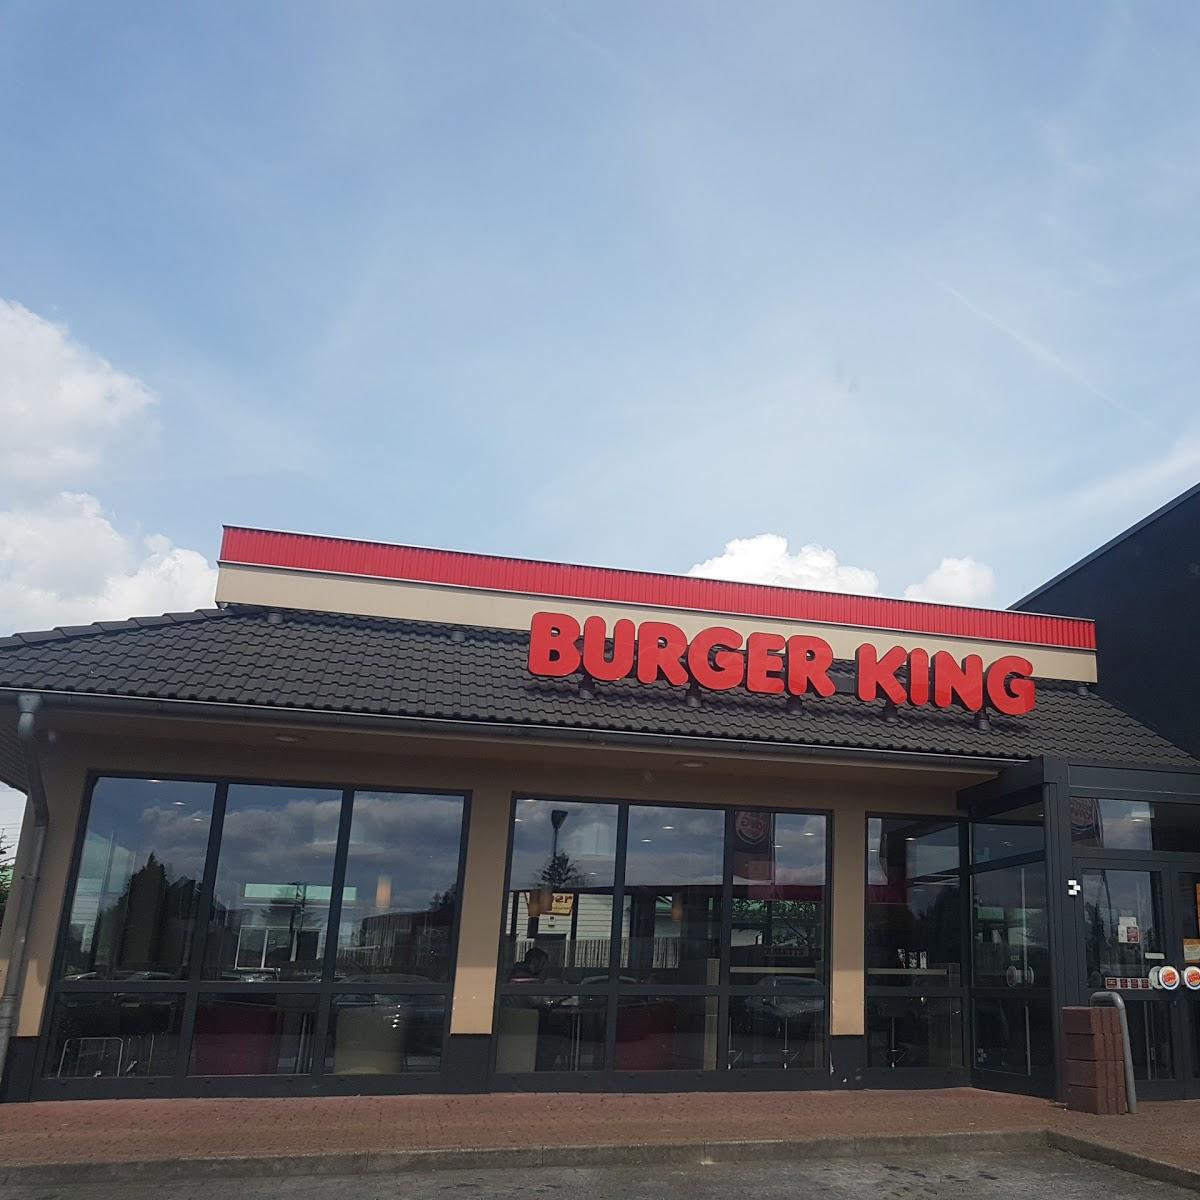 Restaurant "Burger King" in Kamen